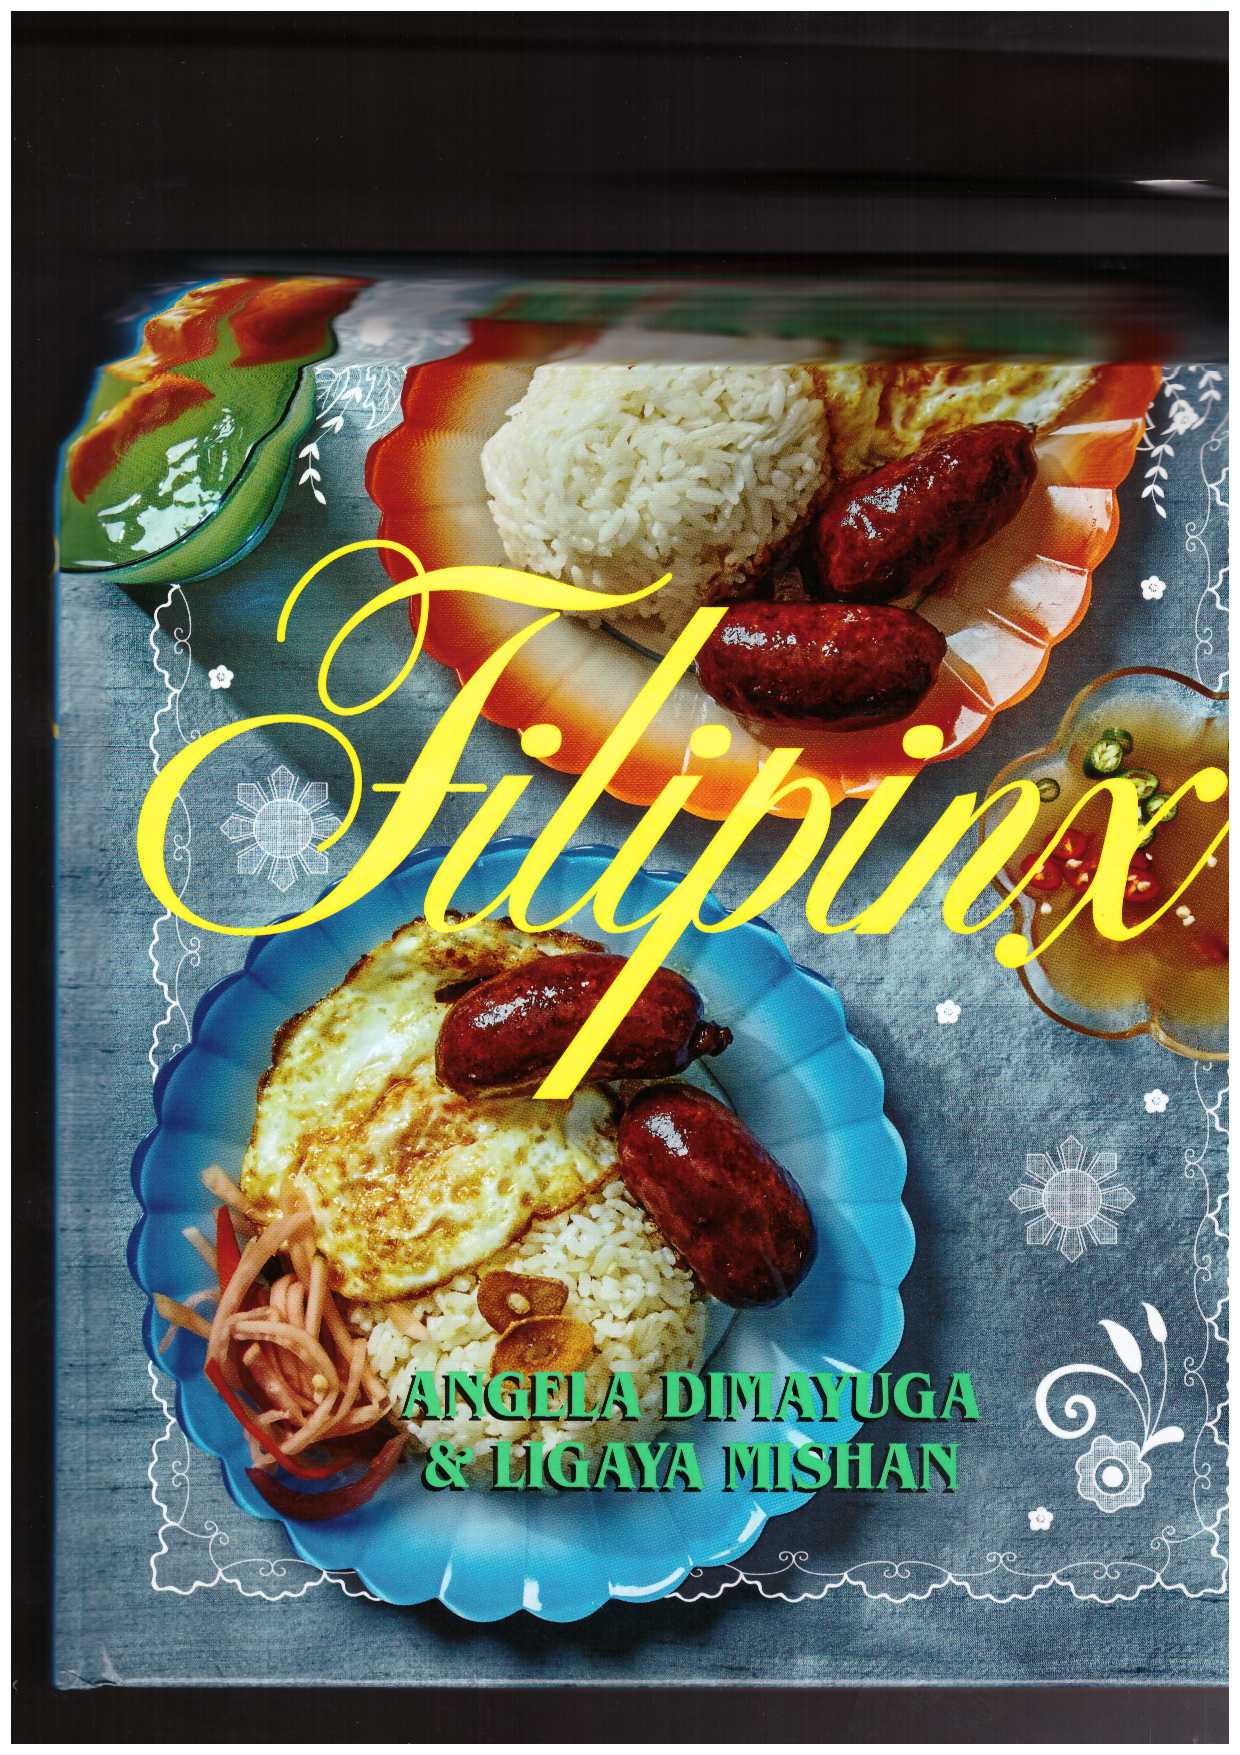  DIMAYUGA, Angela; MISHAN, Ligaya  - Filipinx: Heritage Recipes from the Diaspora